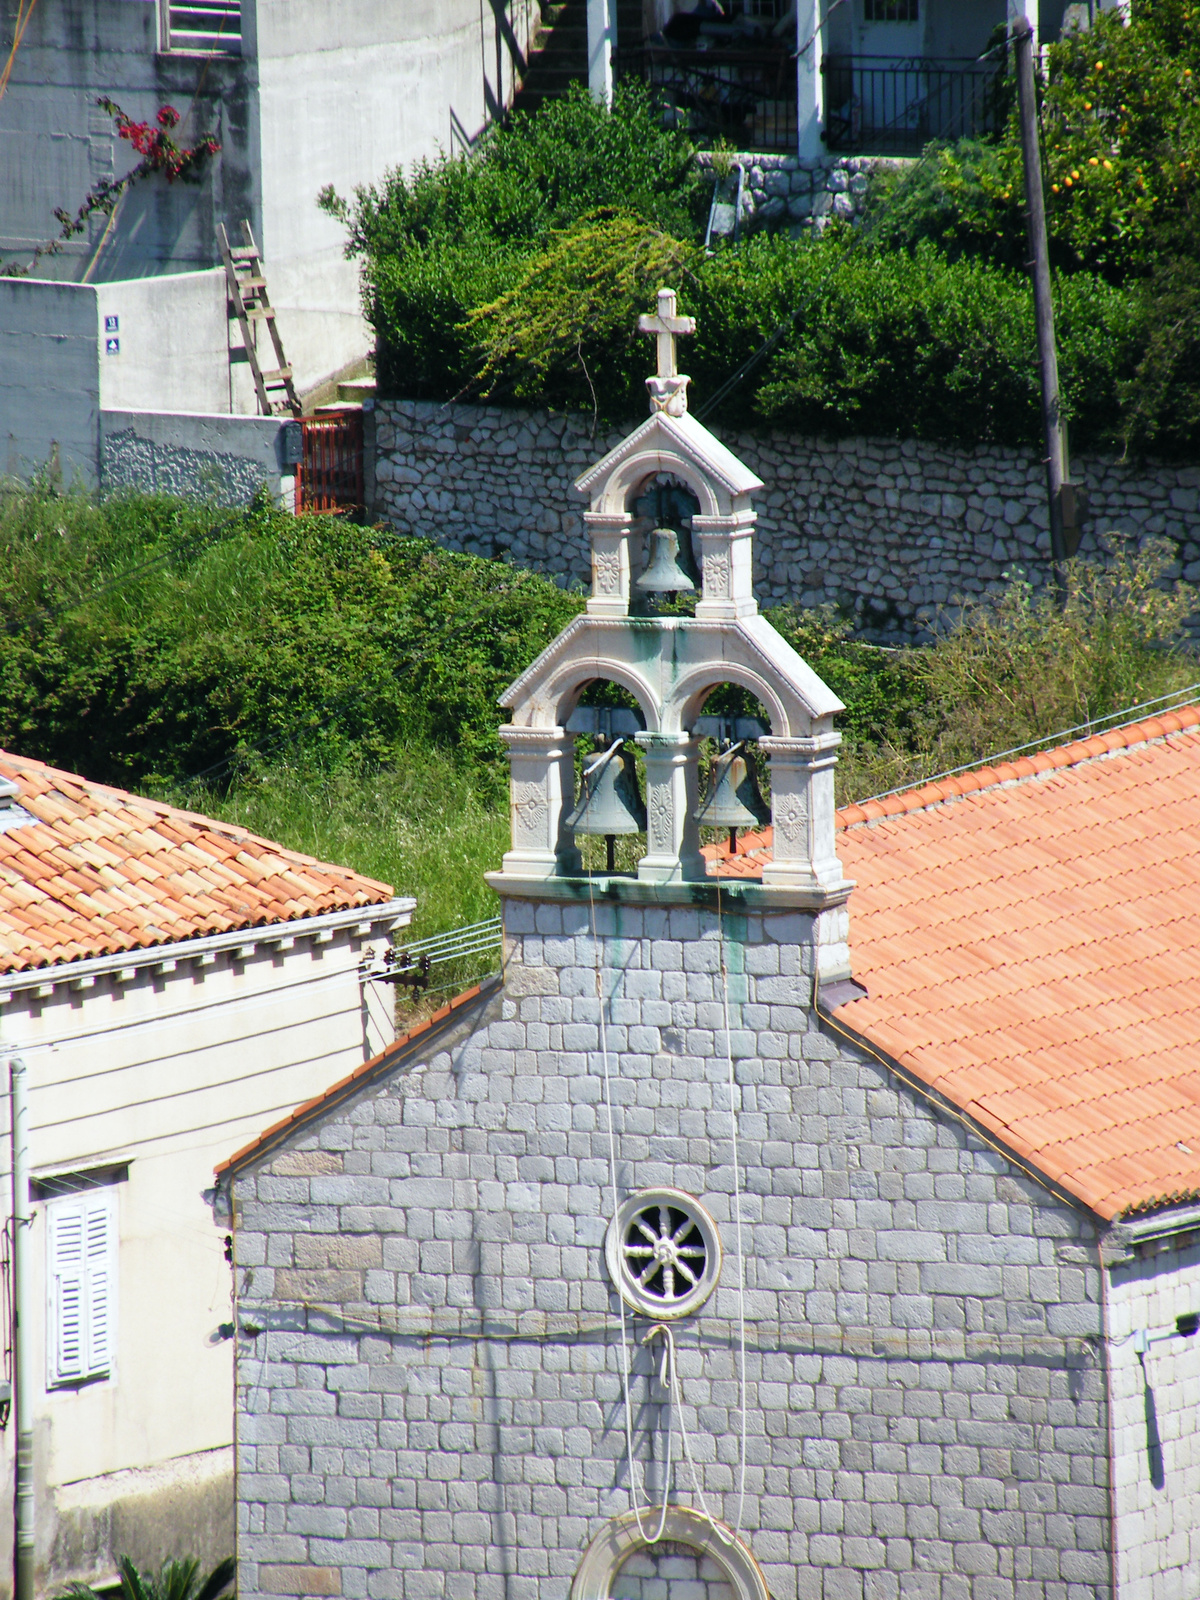 Dubrovnik 10